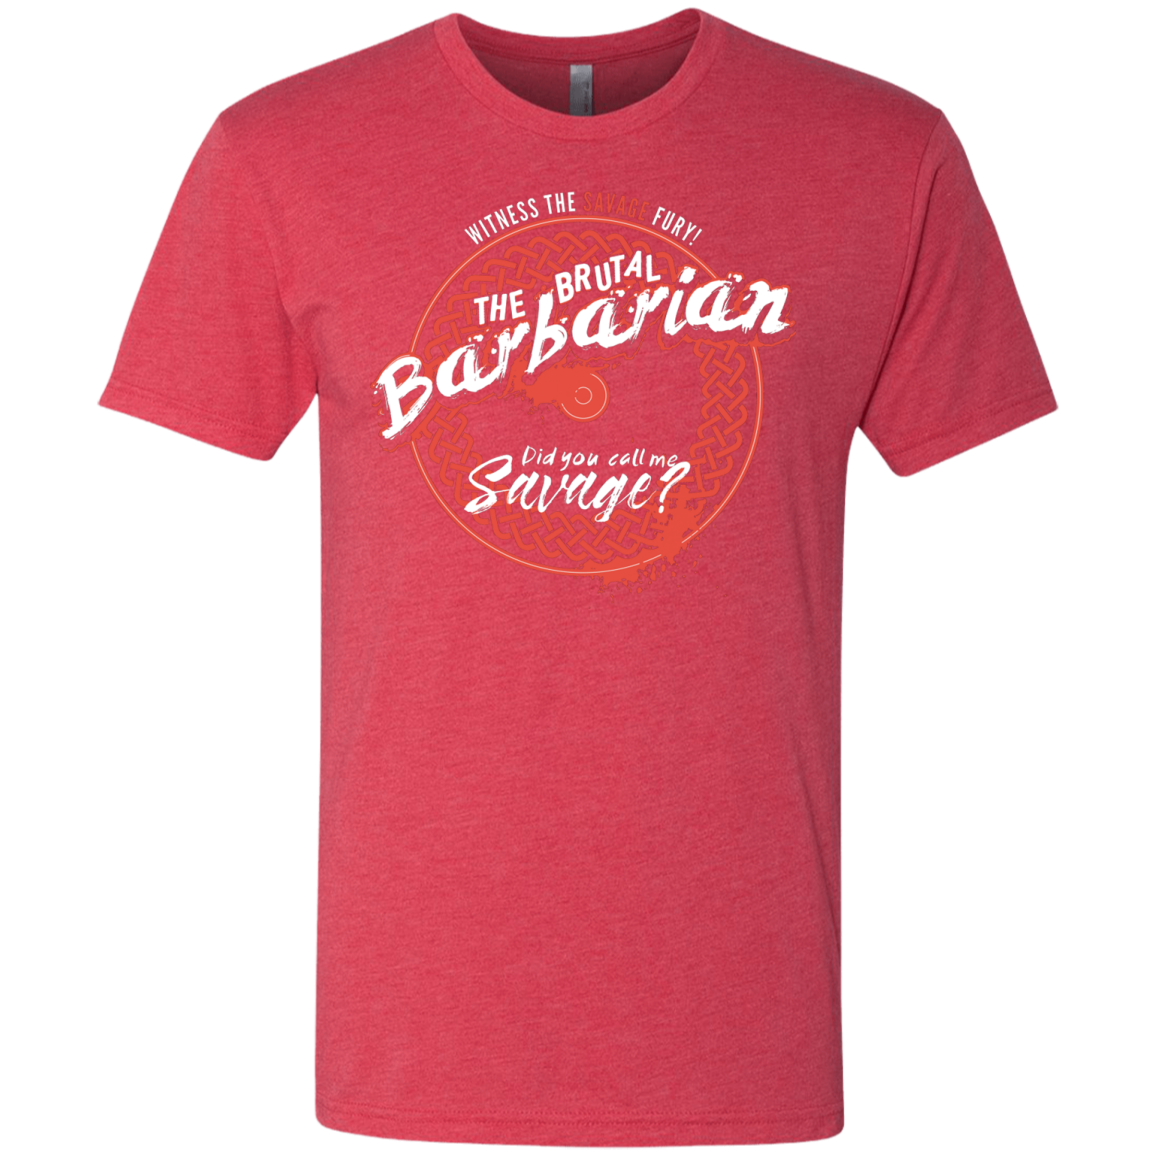 Barbarian Men's Triblend T-Shirt